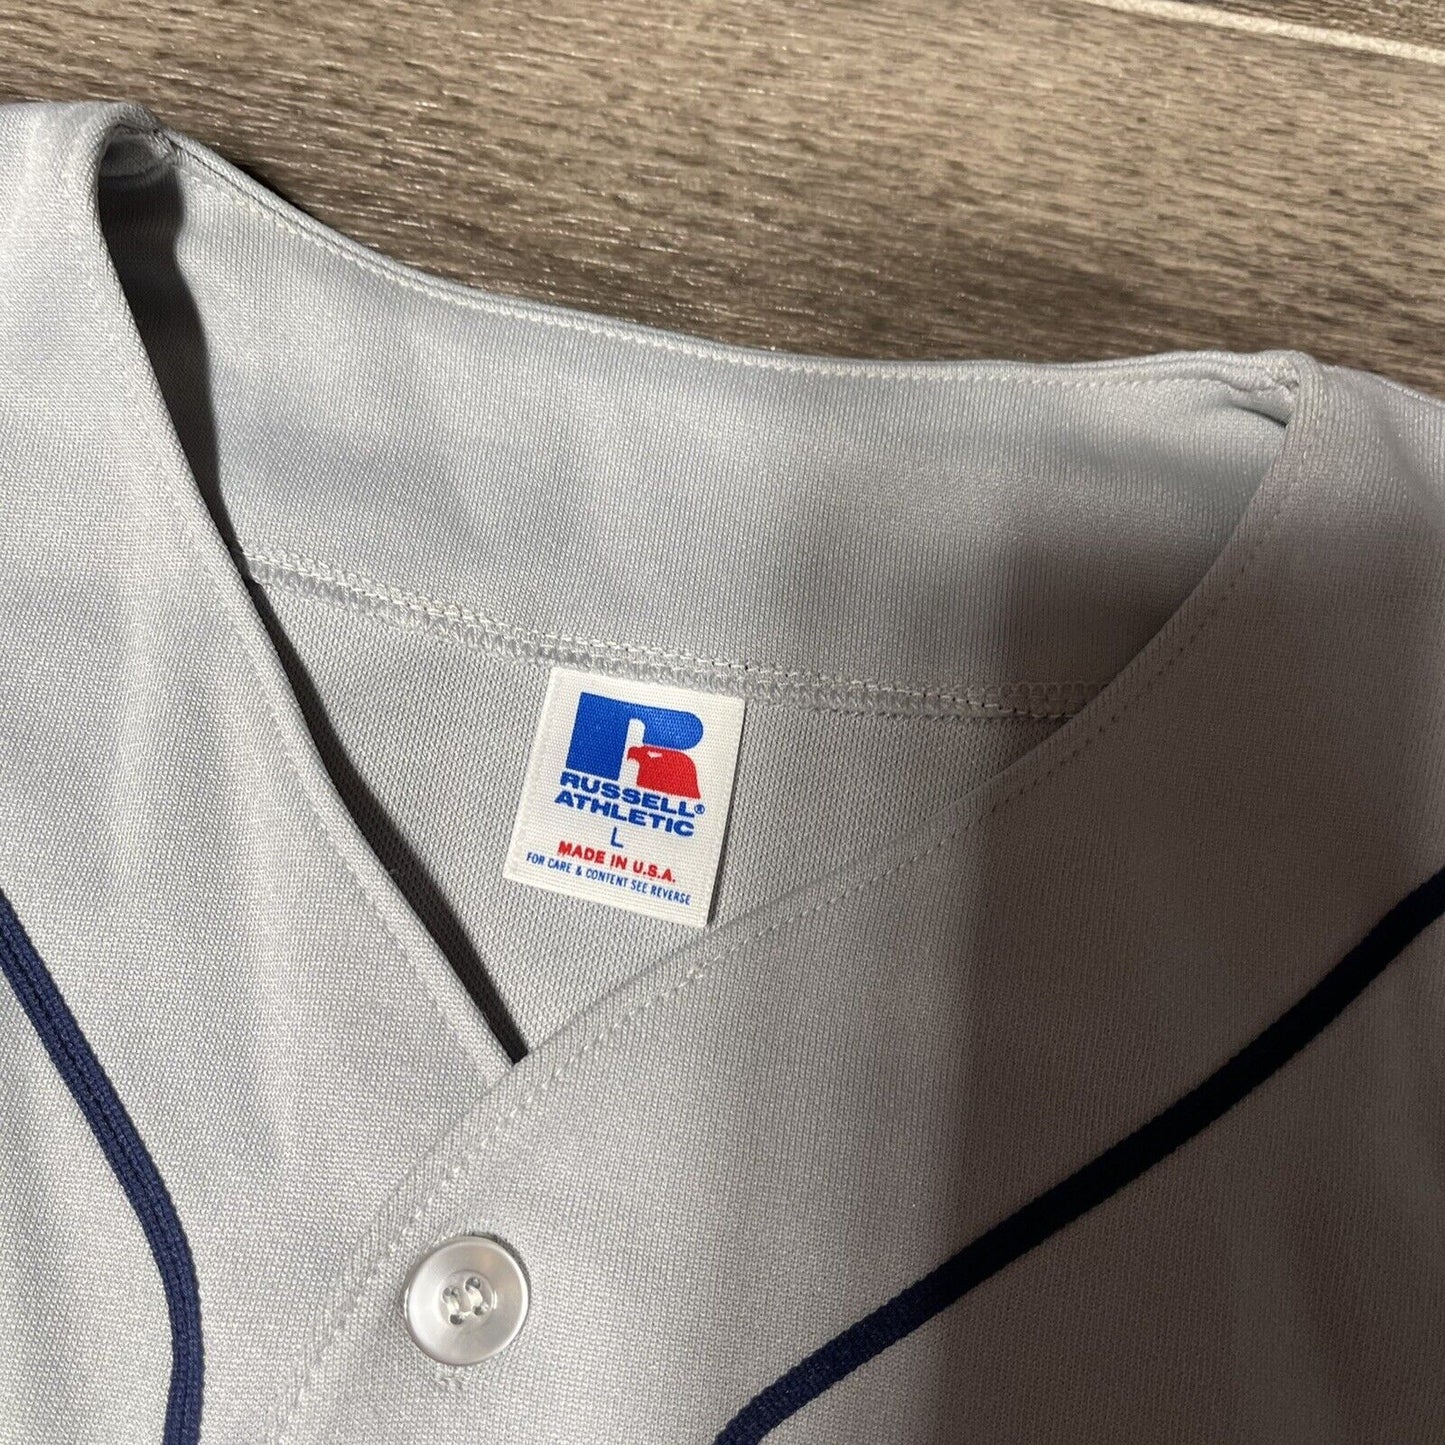 VTG 90s Russell Athletic Toronto Blue Jays MLB Baseball Jersey Shirt Large